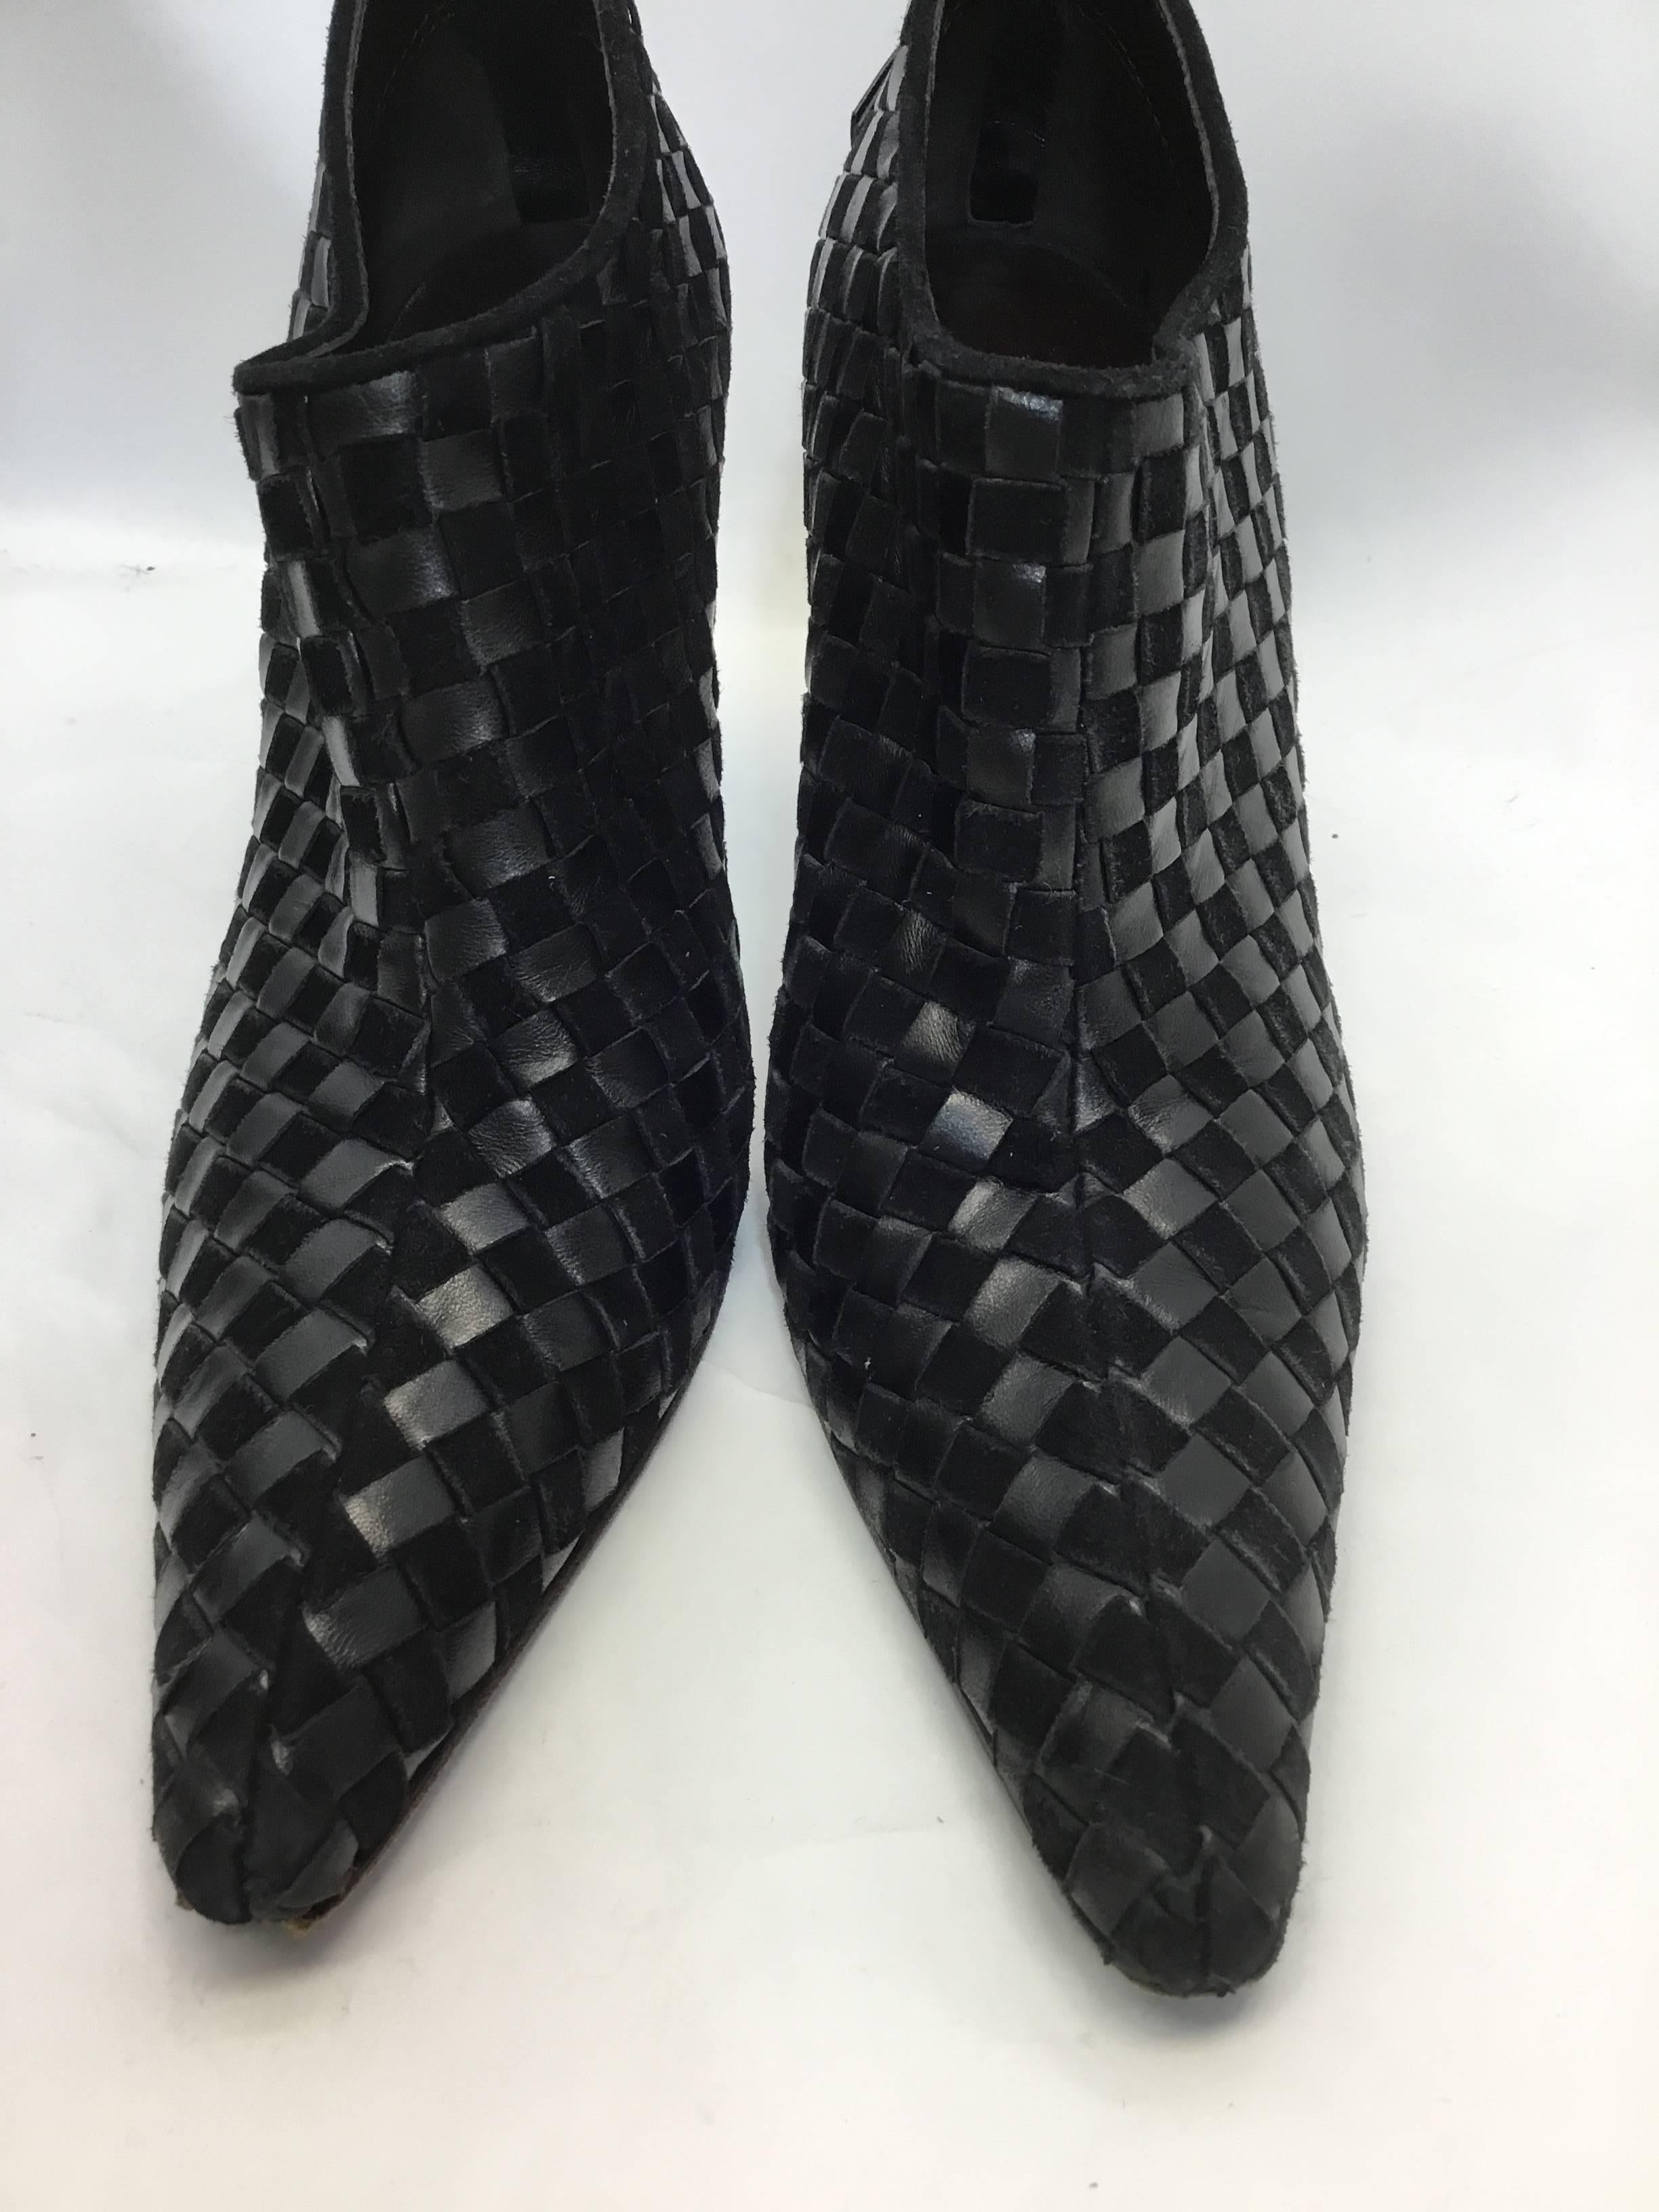 Bottega Veneta Black Leather Ankle Booties
$299
Size 37
3.5 inch heel
Zip up ankle 